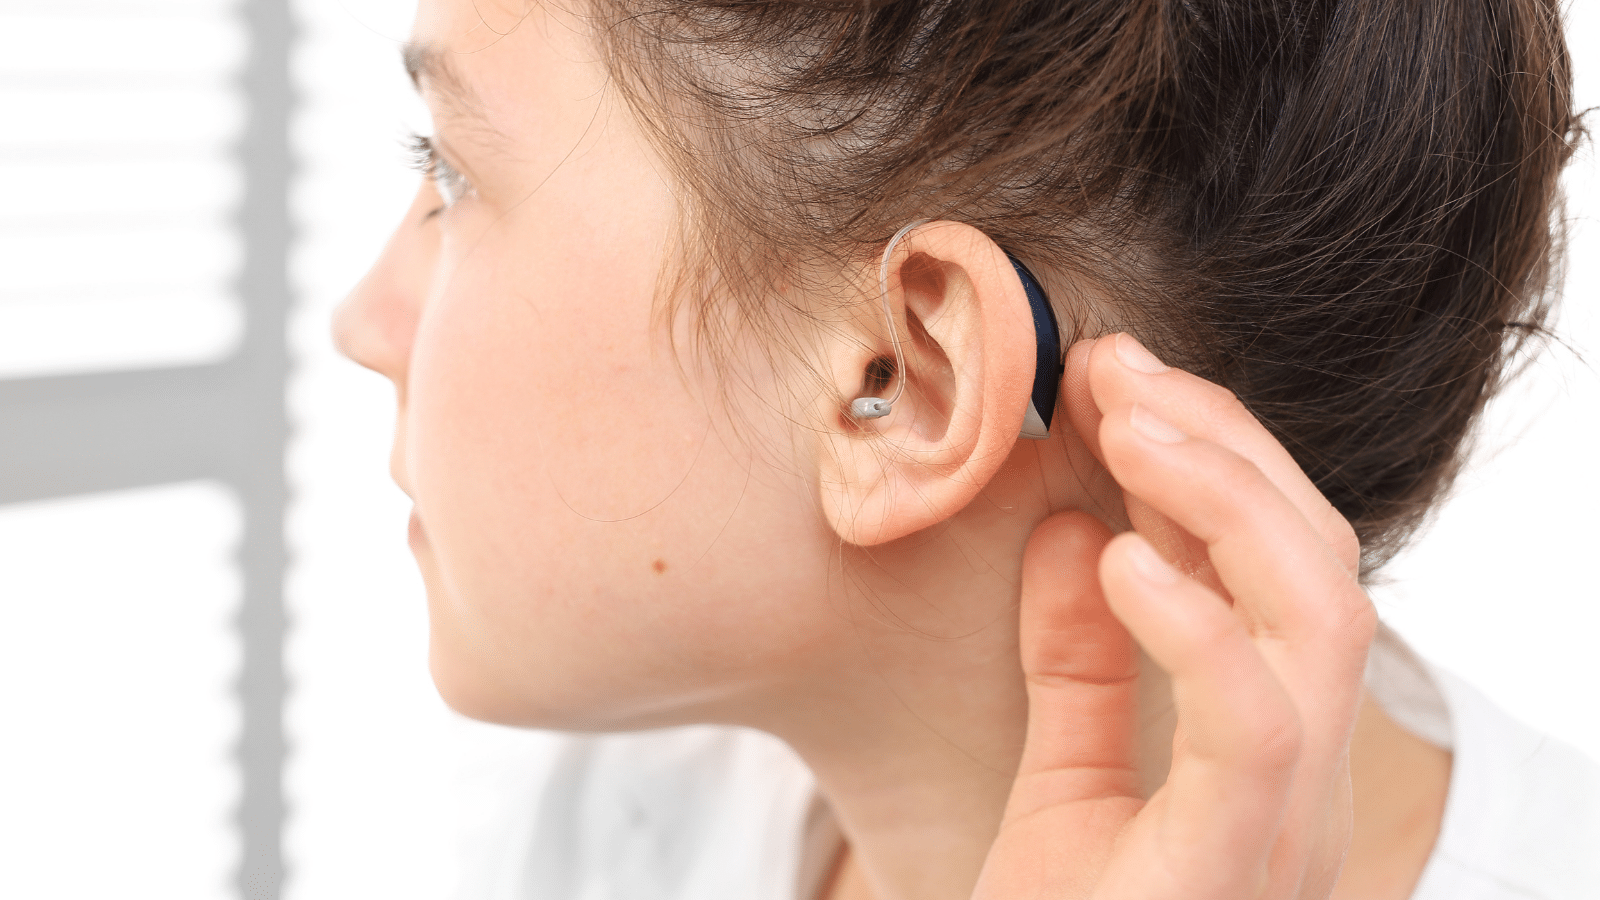 Hearing Aid 2 - Stock Image